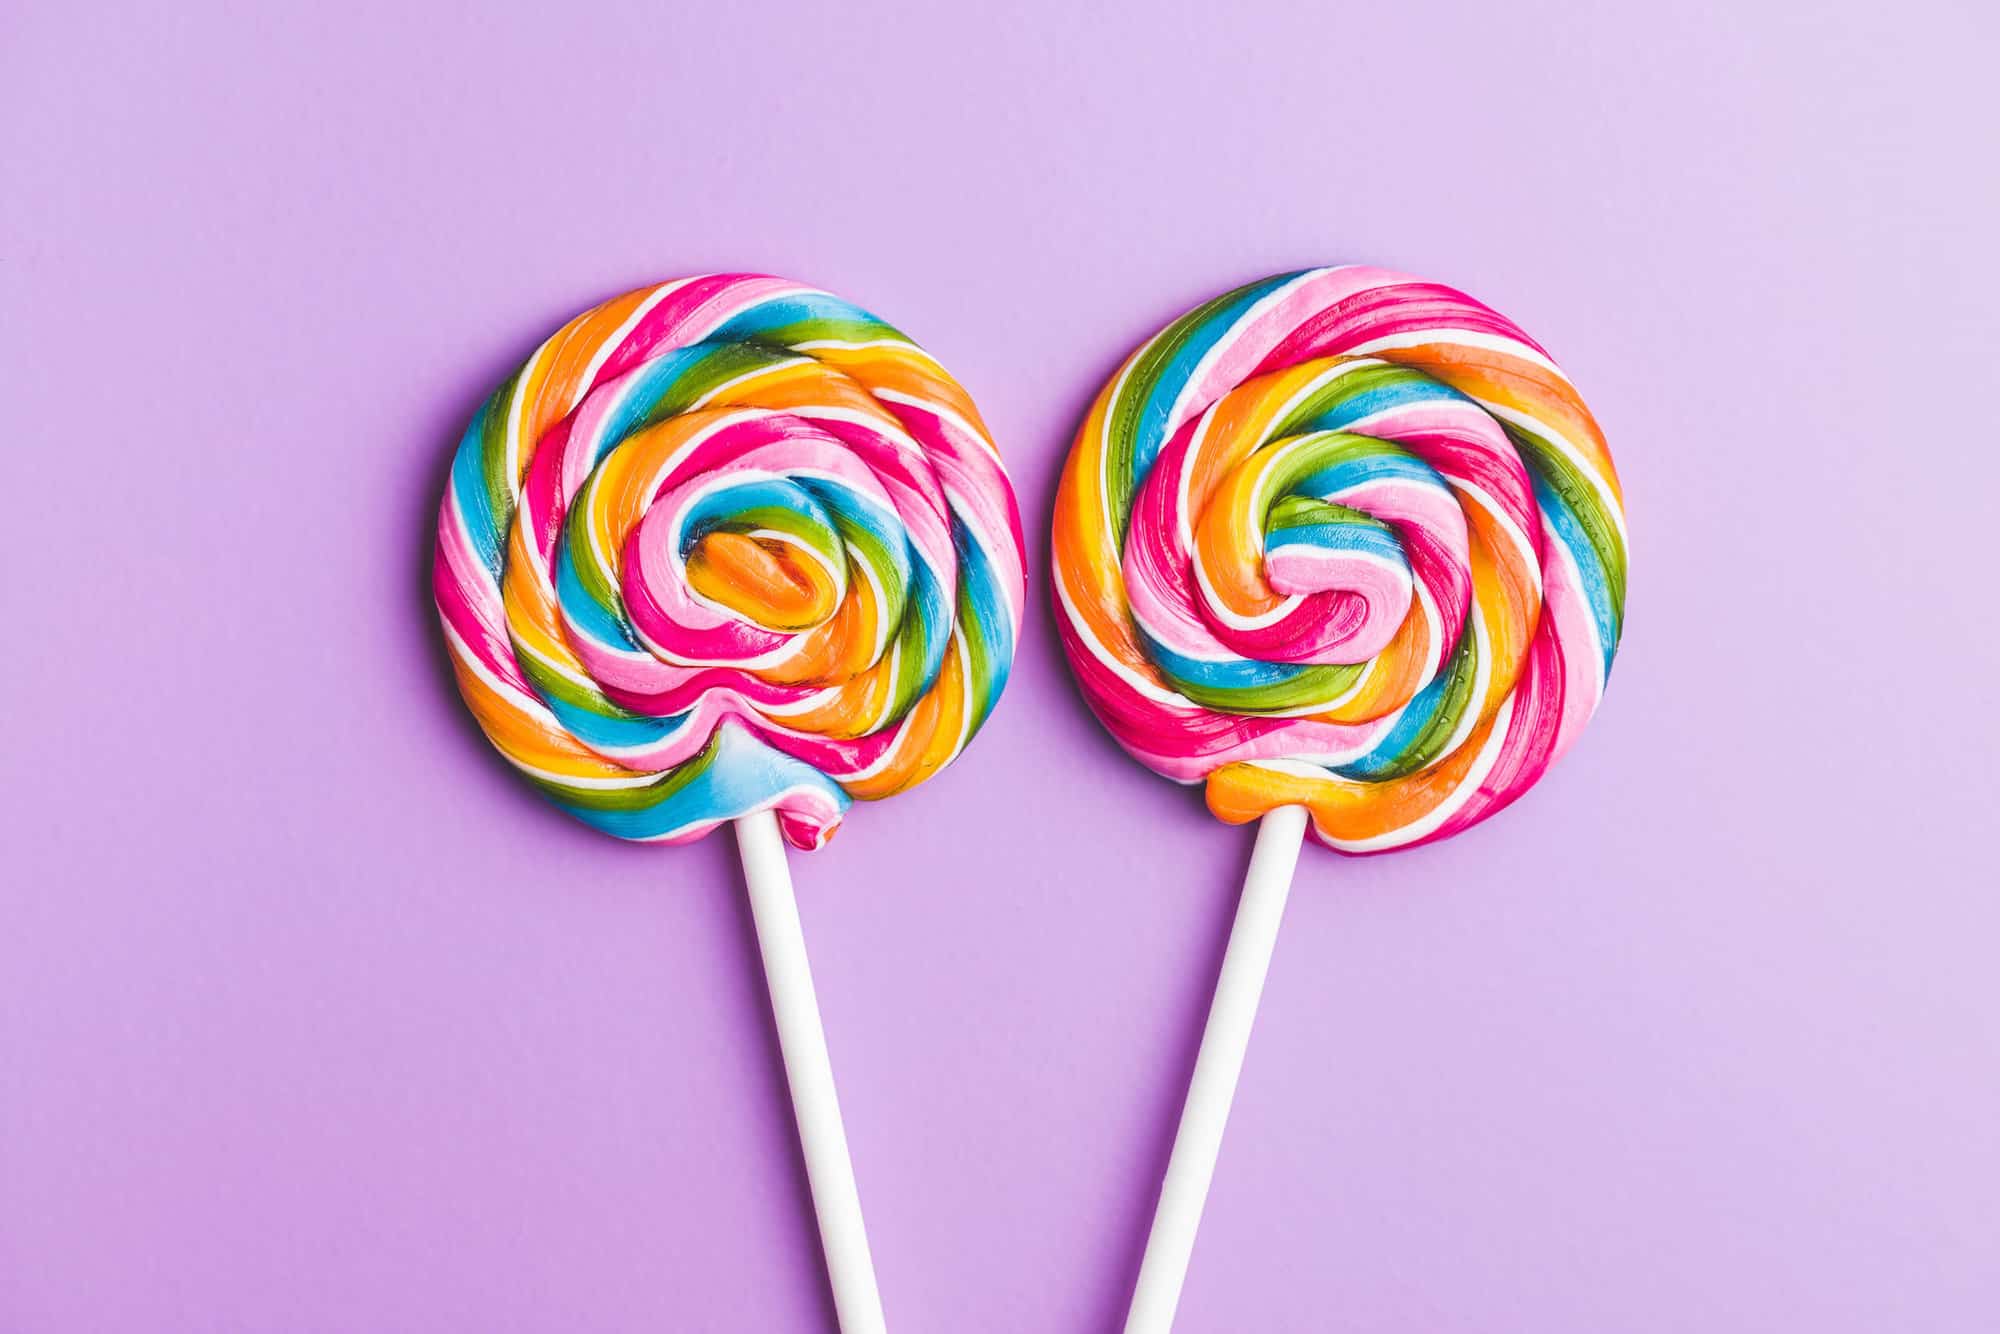 two-sweet-colorful-lollipop-RQZFJDB-scaled.jpg